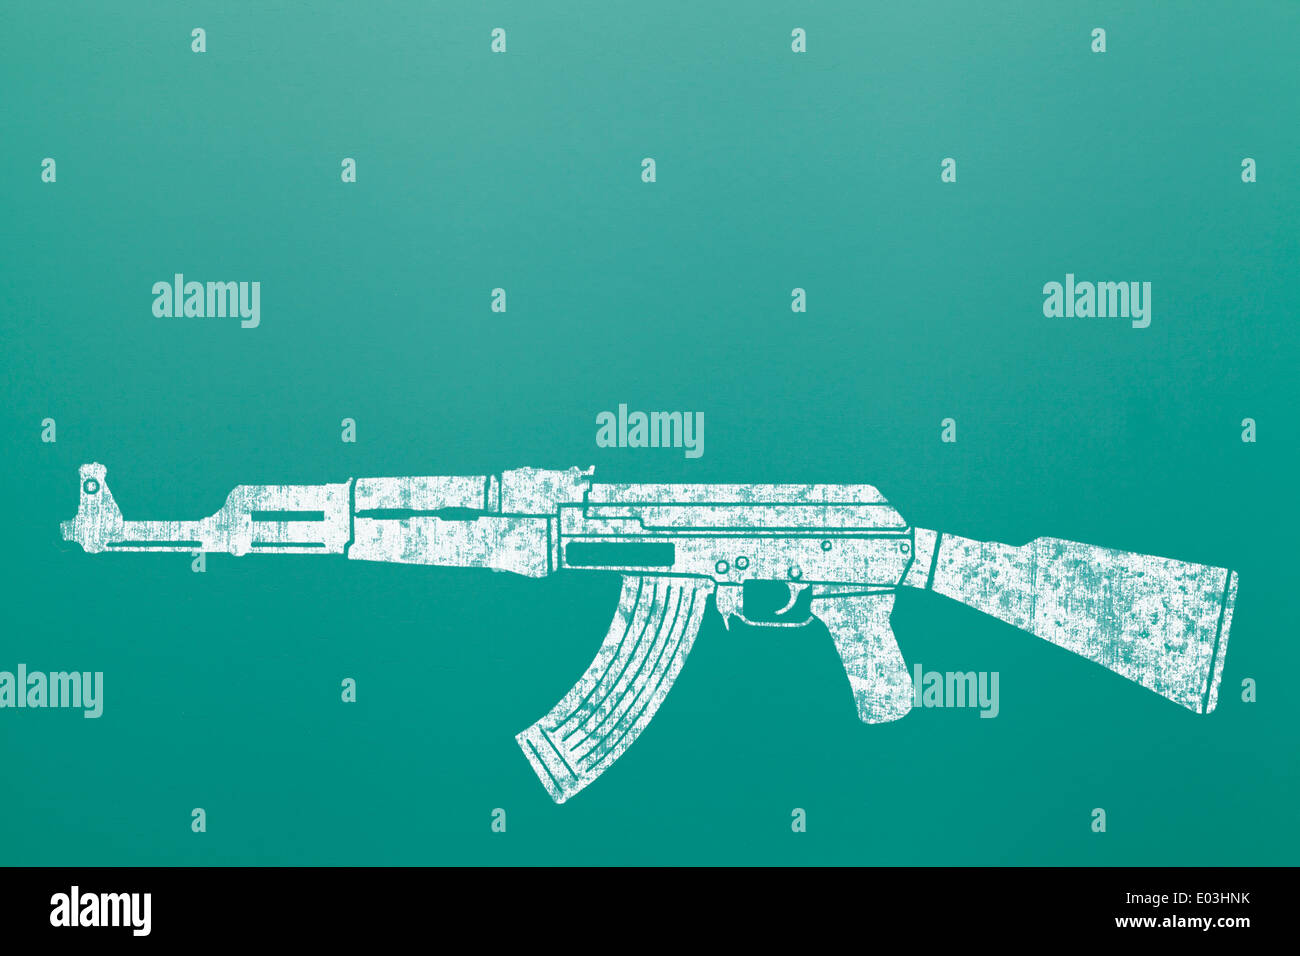 Ak 47 Machine Gun Assault Rifle Draw on Green Chalk Board. Stock Photo